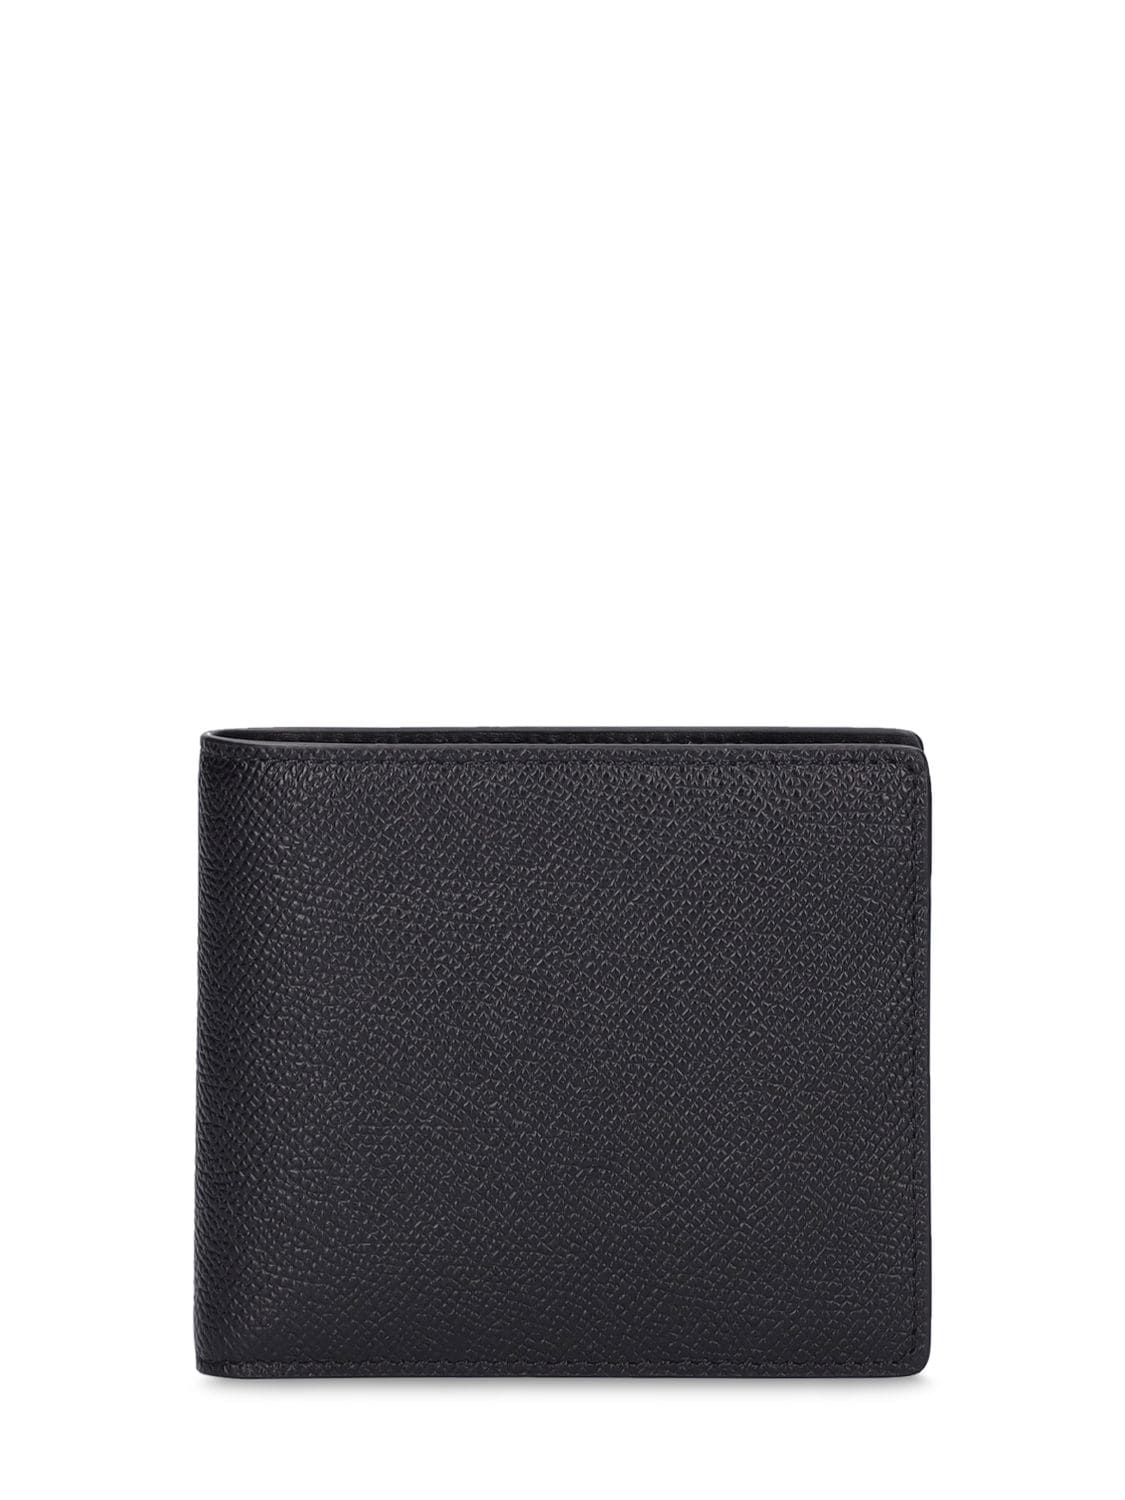 Grainy Leather Billfold Wallet